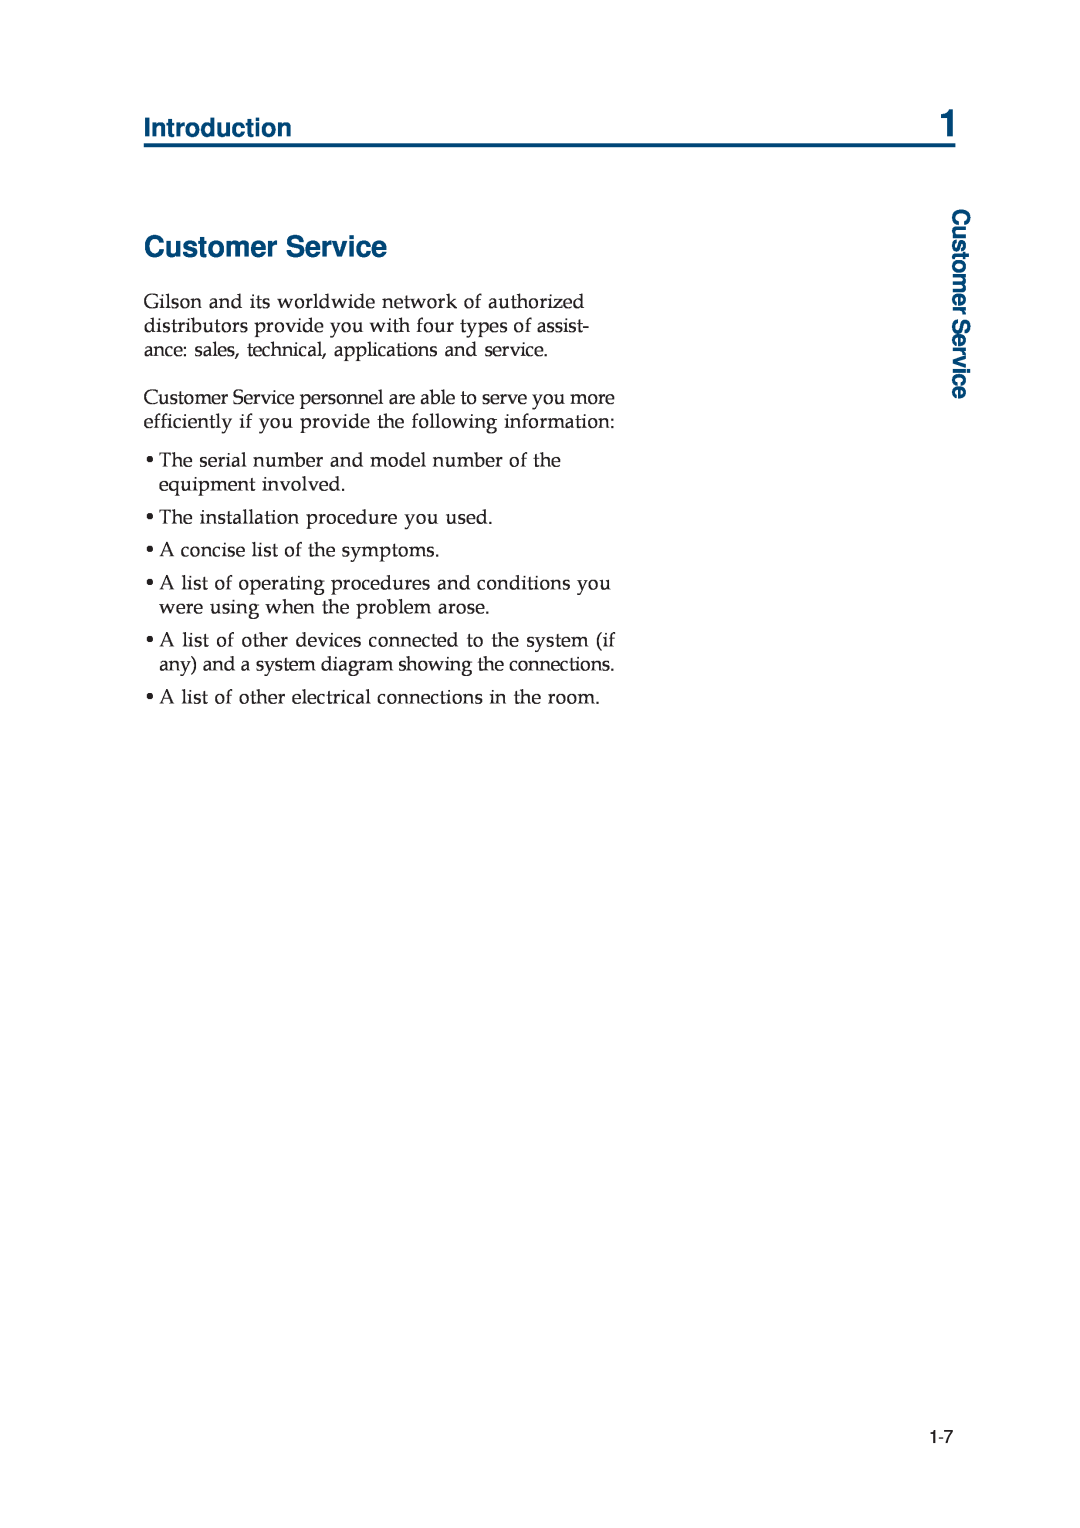 Gilson 402 manual Customer Service, Introduction 